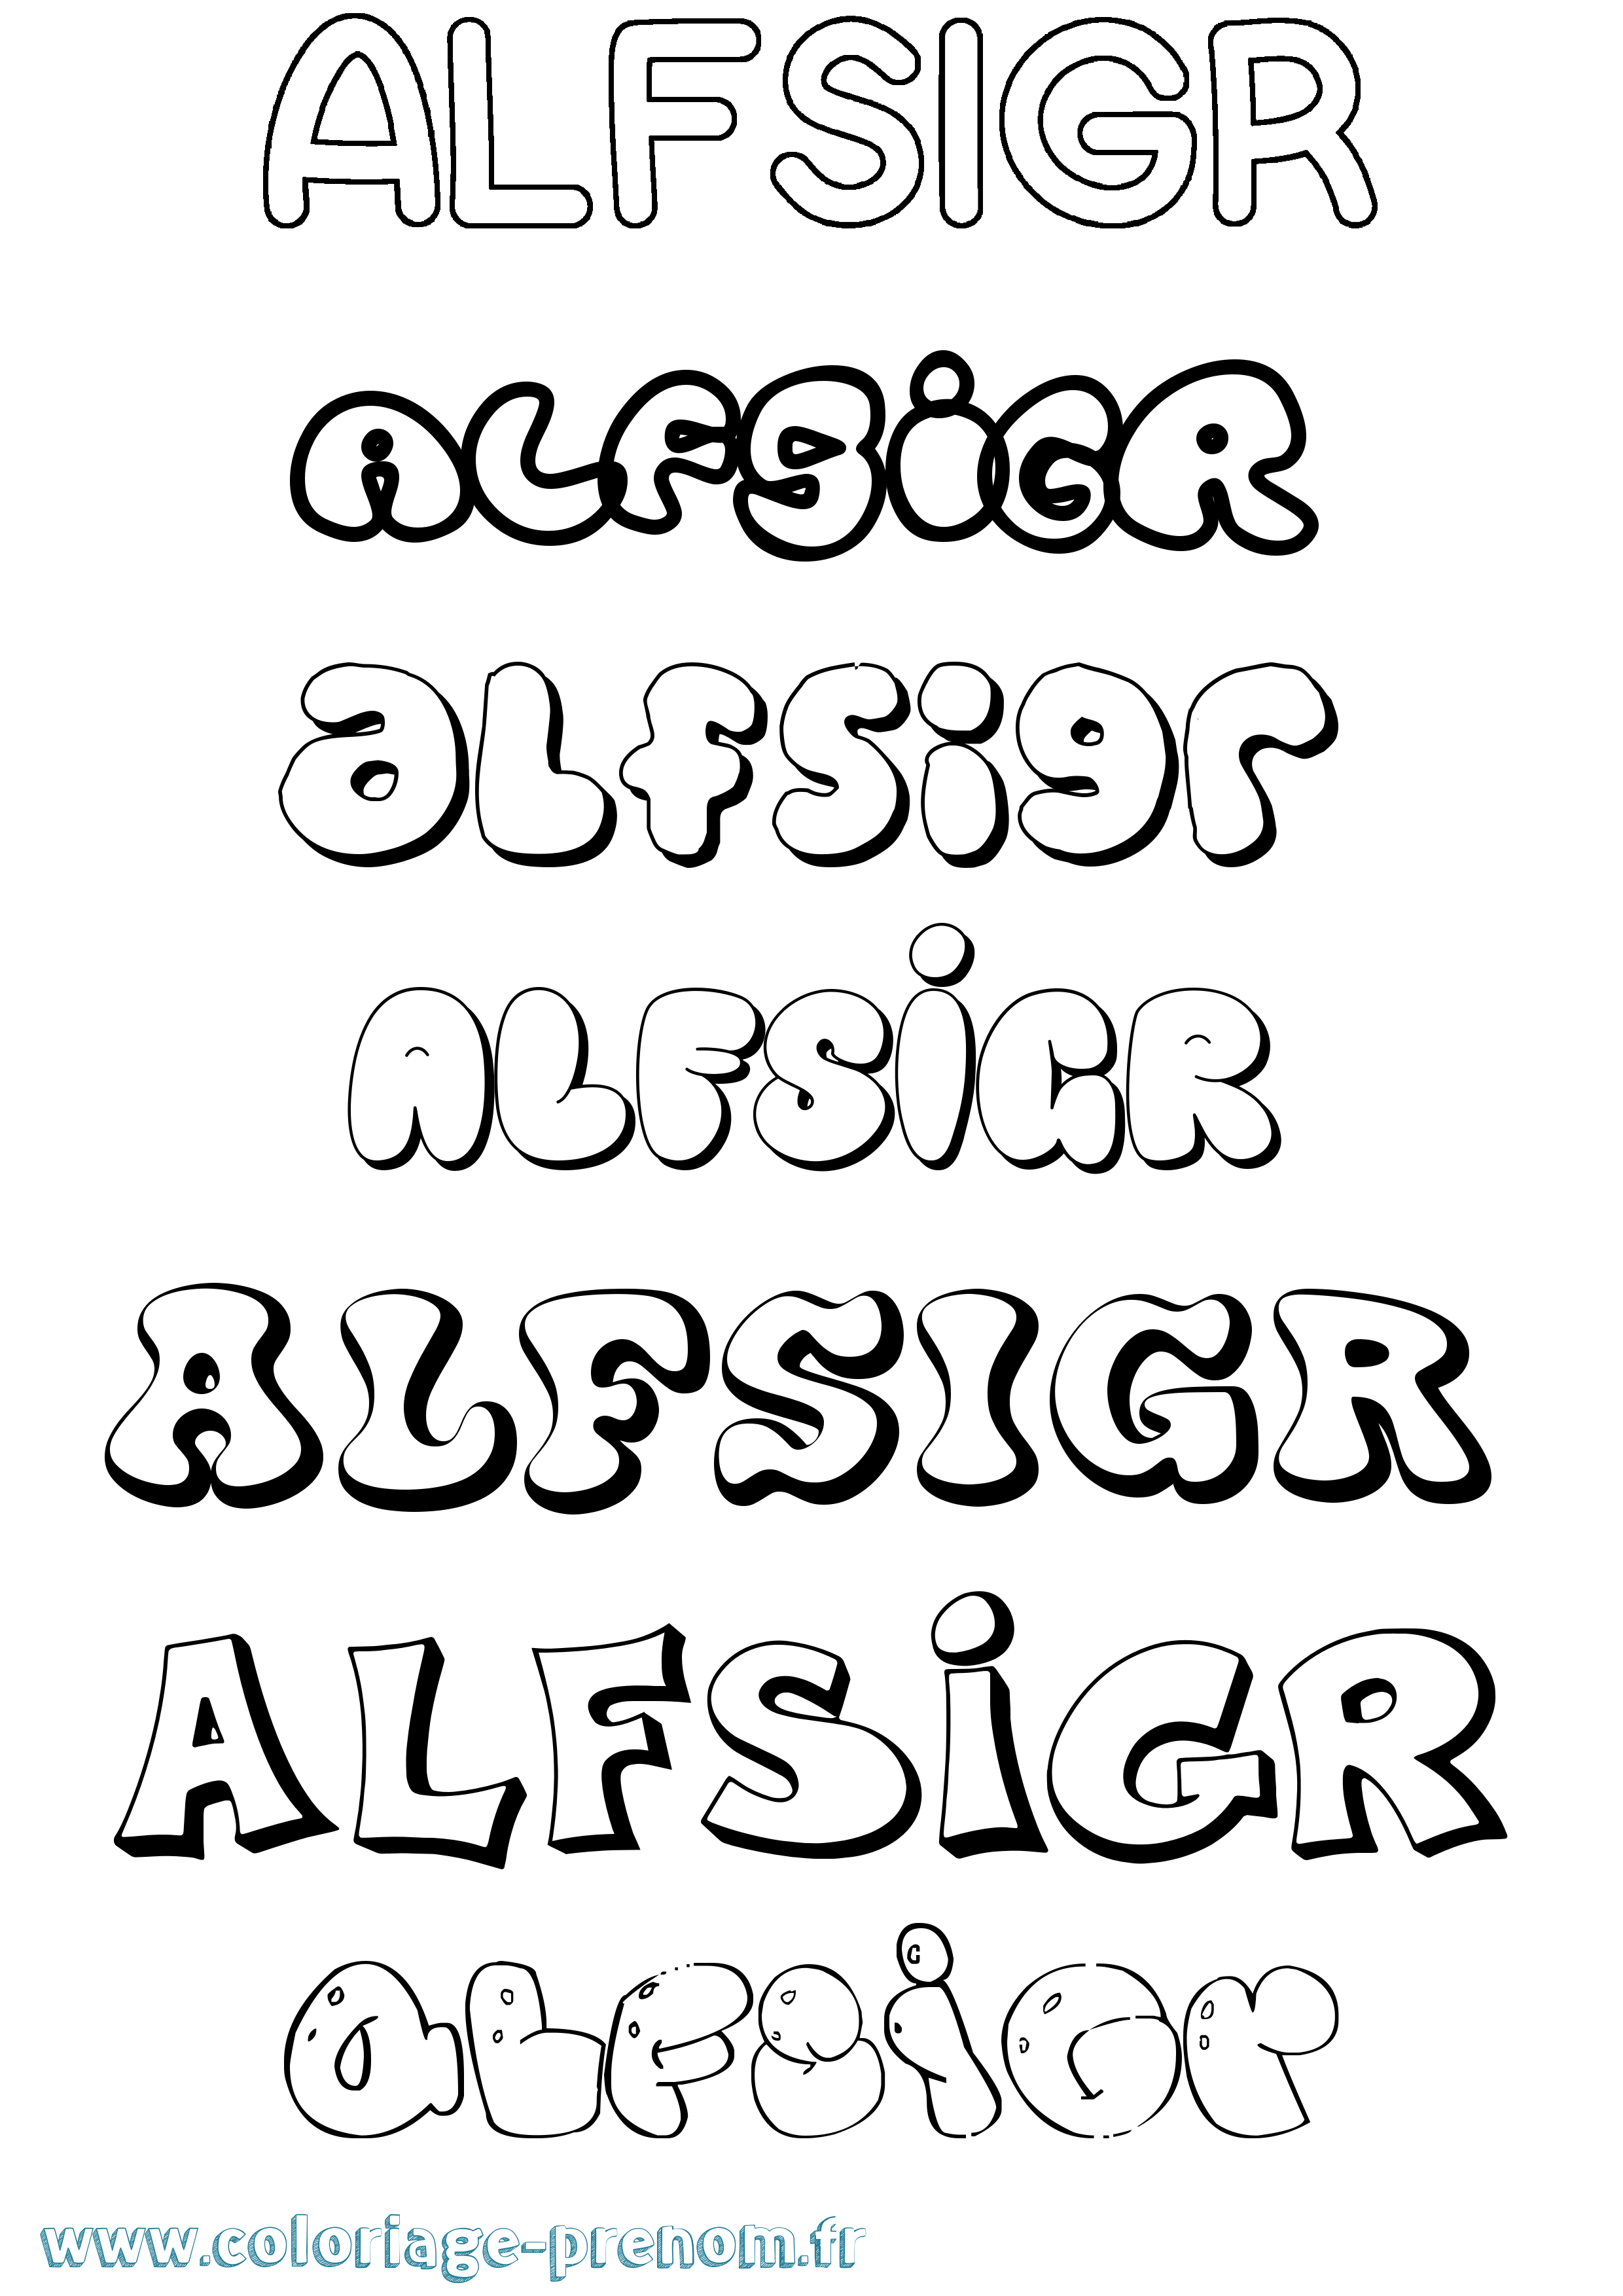 Coloriage prénom Alfsigr Bubble